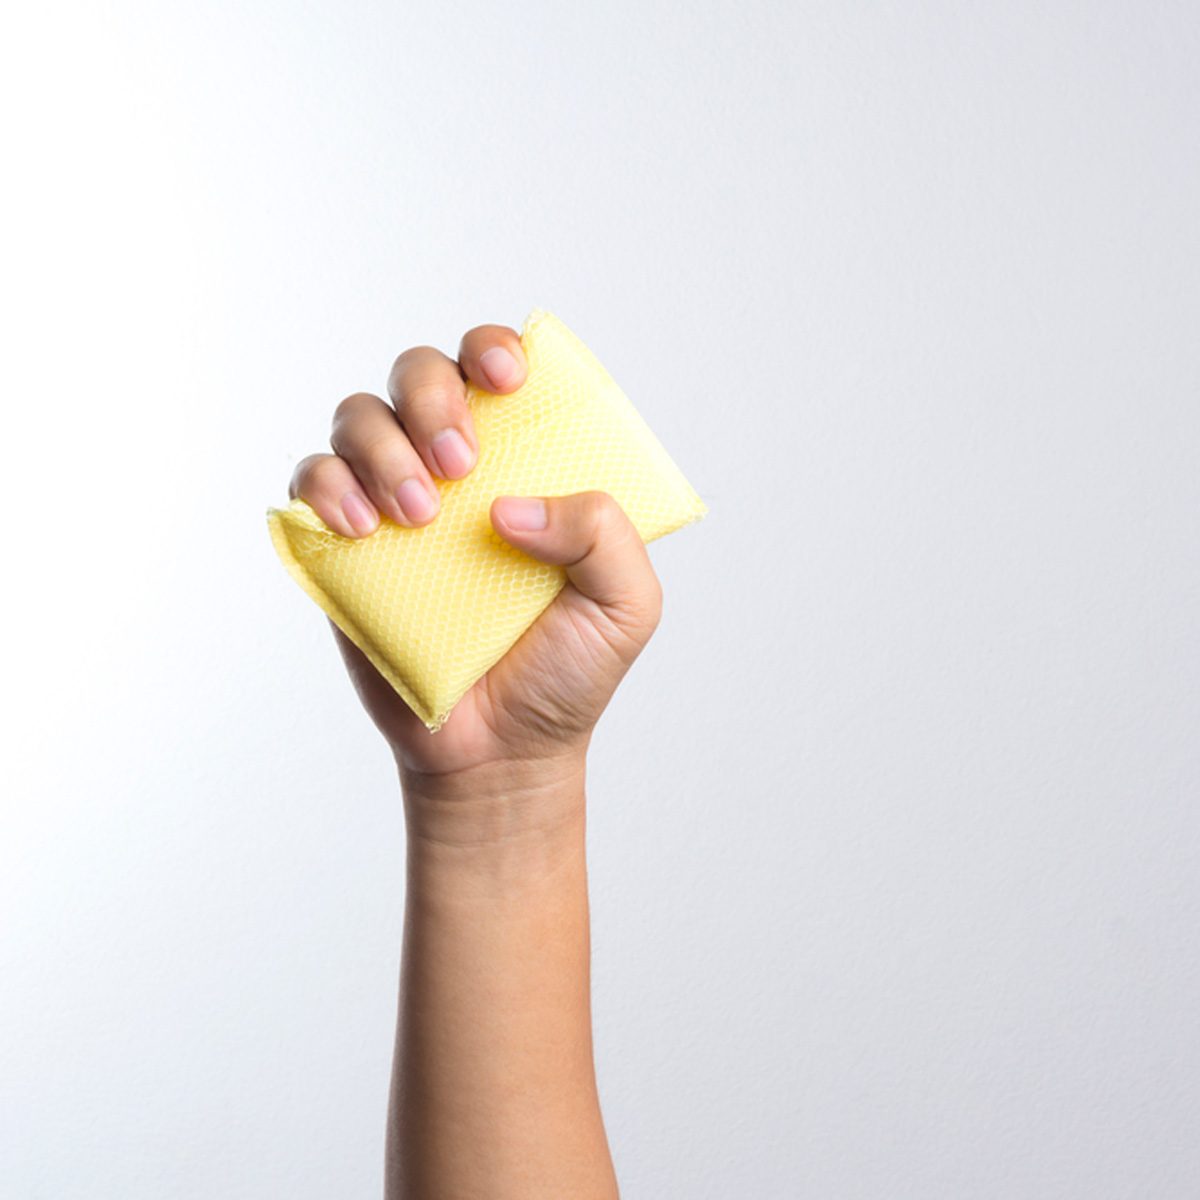 how do you clean a sponge